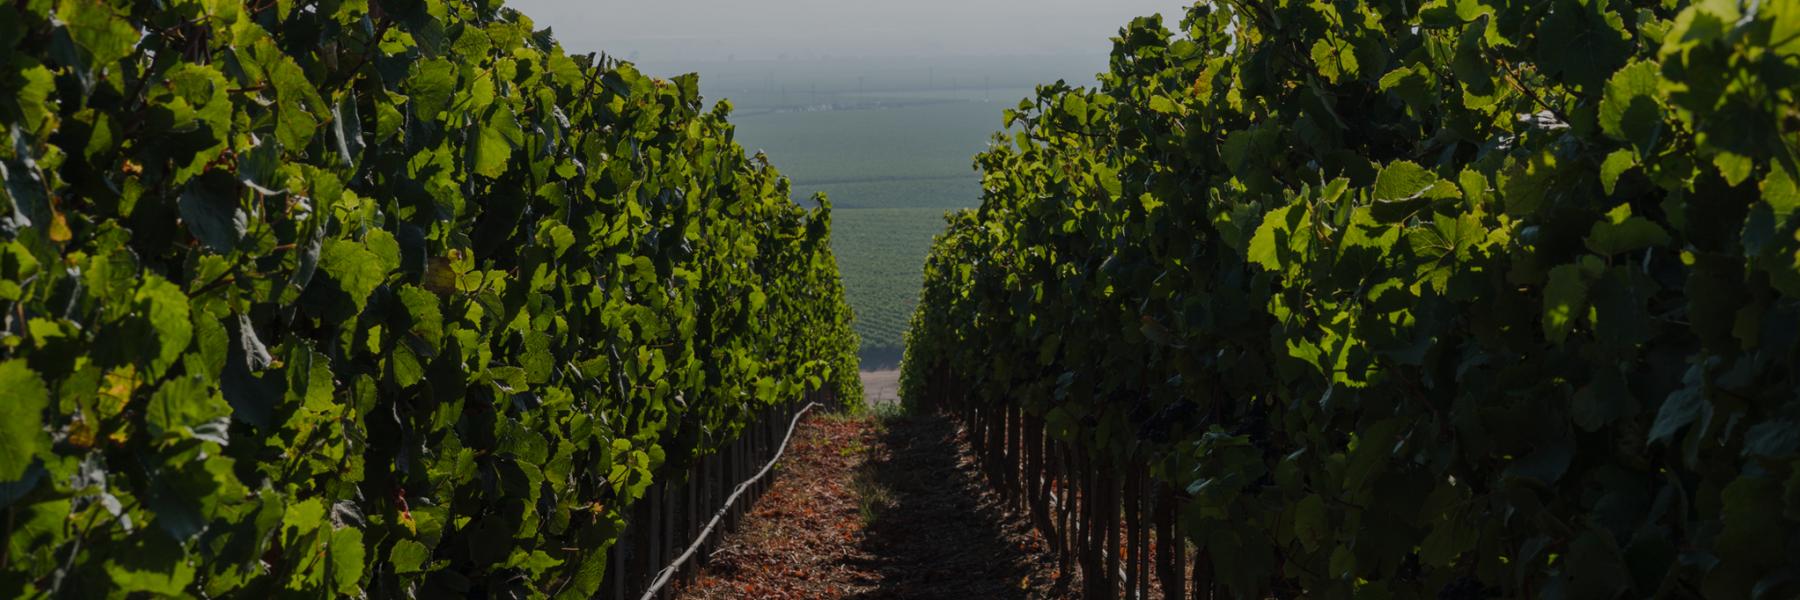 Carmel Road vineyards, Monterey County, California